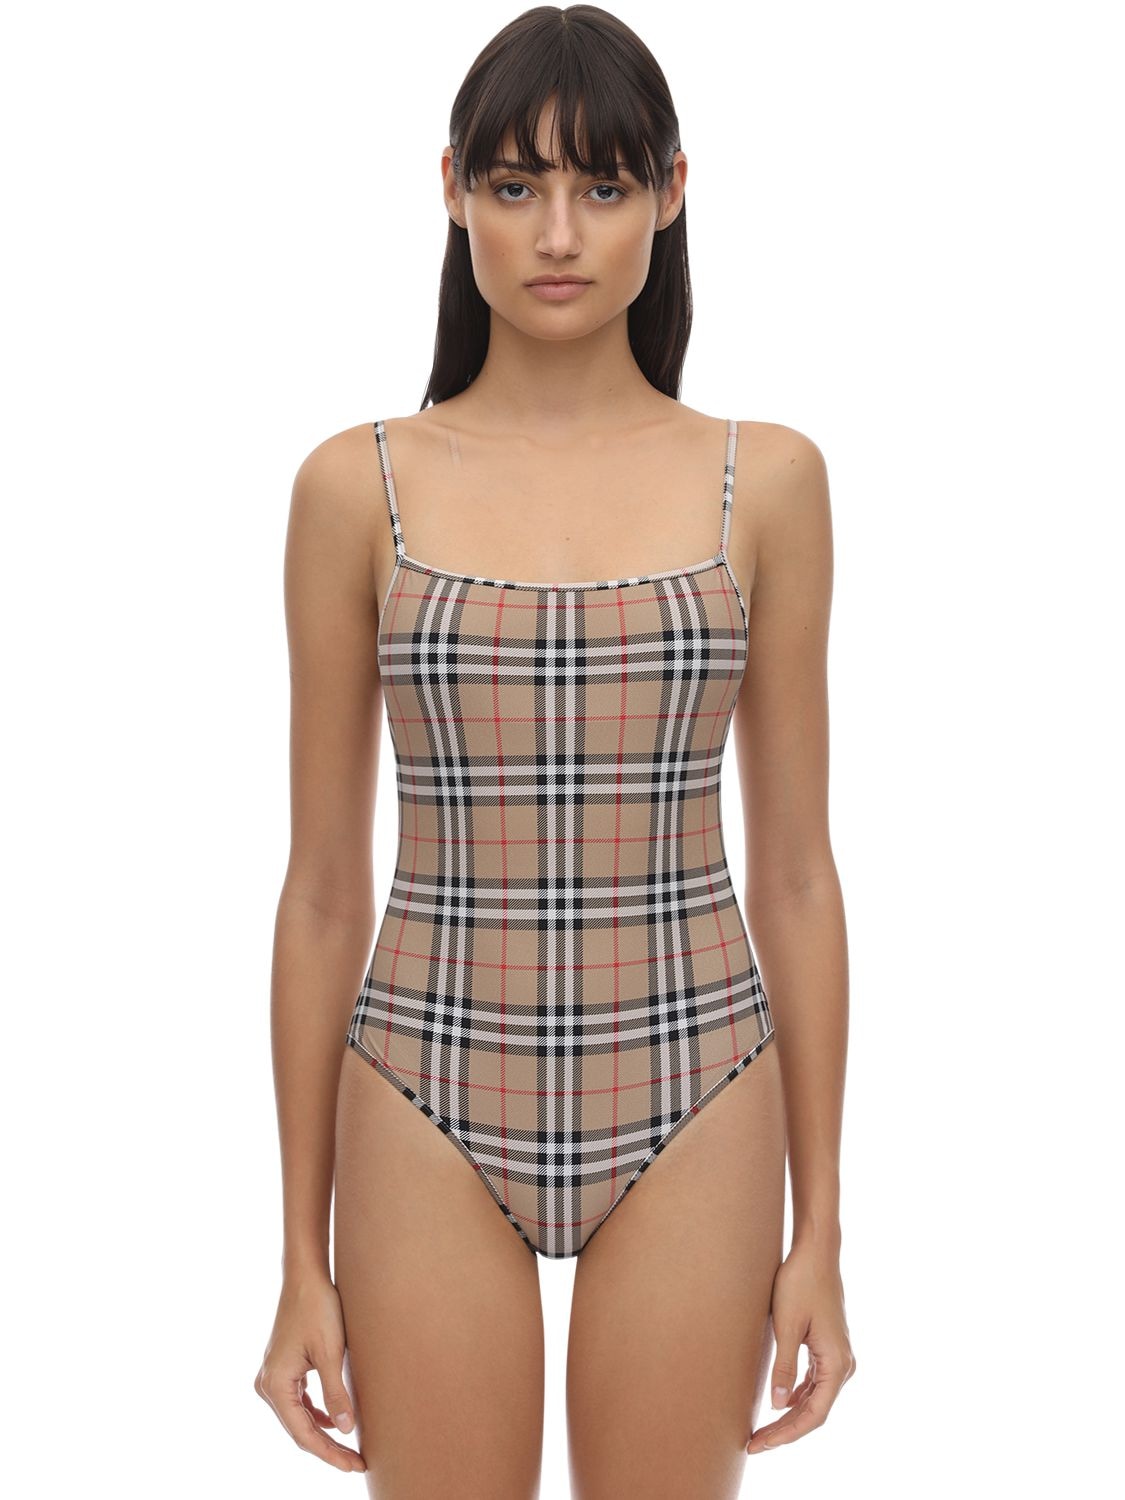 burberry girl bathing suit